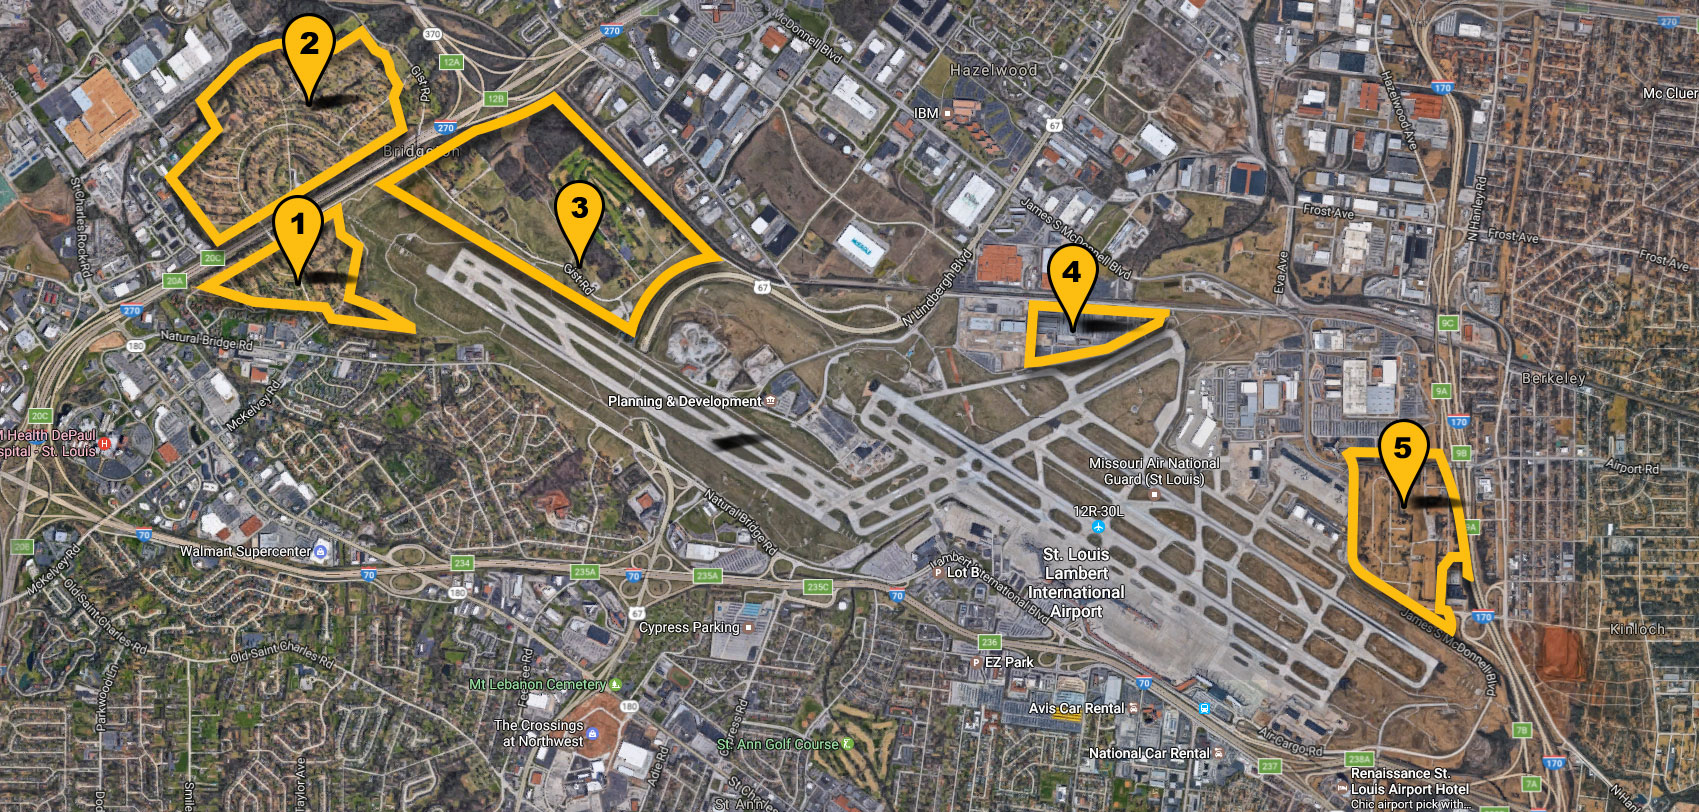 St. Louis Lambert International Airport Sites - The Freightway